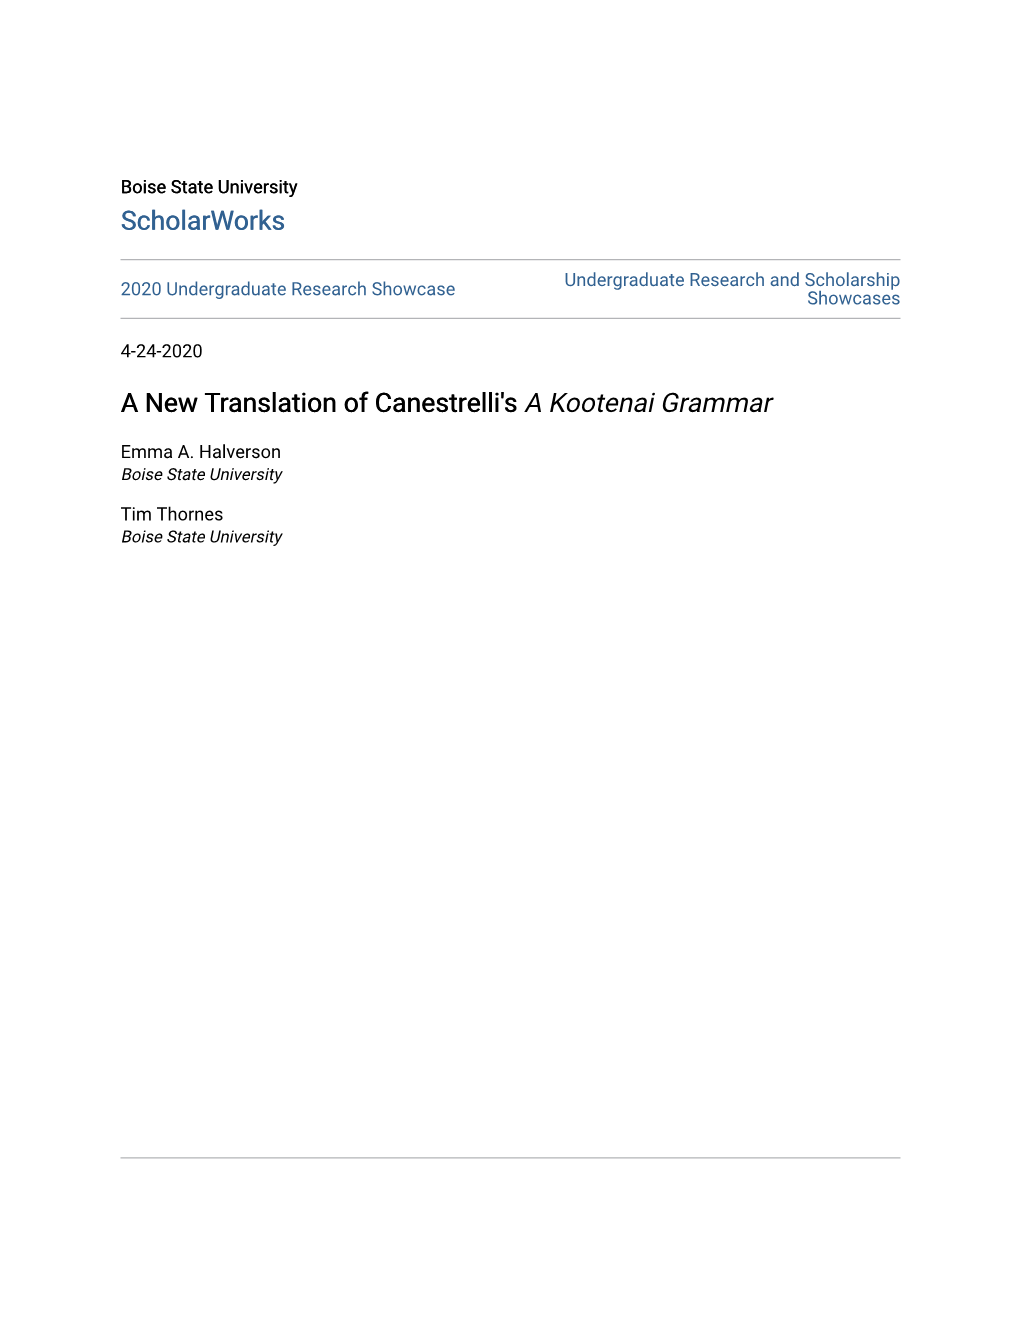 A New Translation of Canestrelli's a Kootenai Grammar